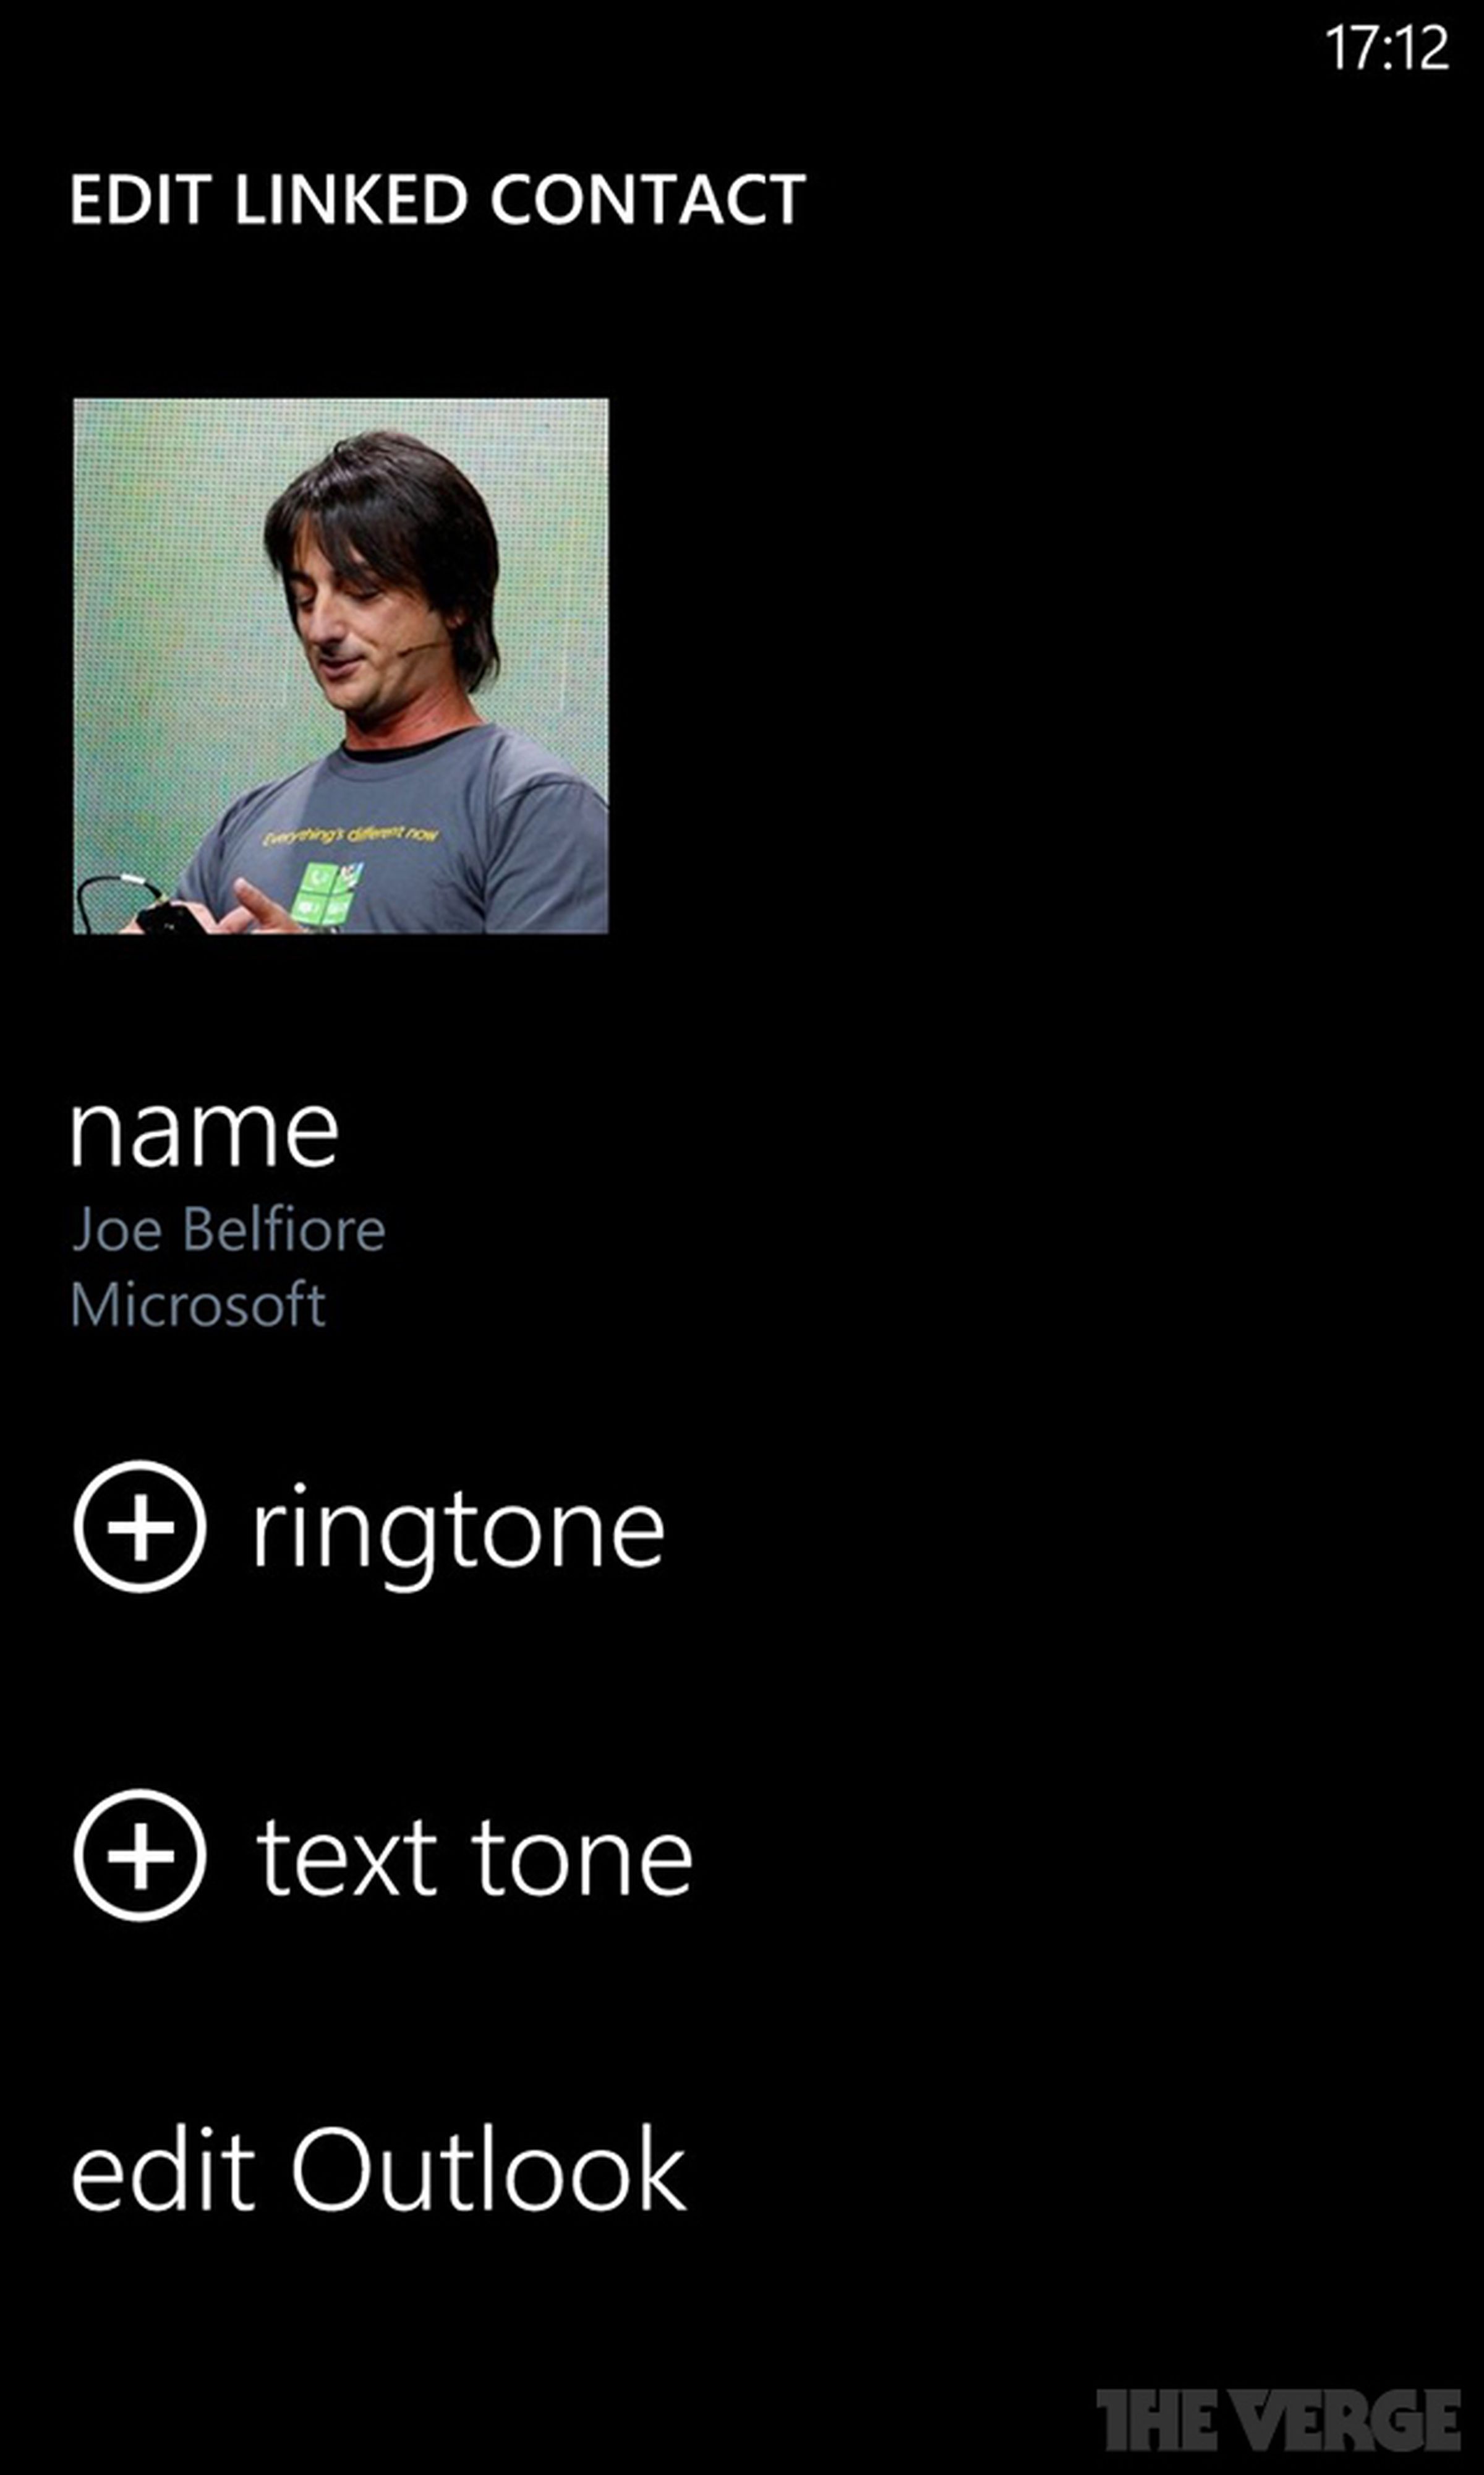 Windows Phone 8 Update 3 hands-on screenshots